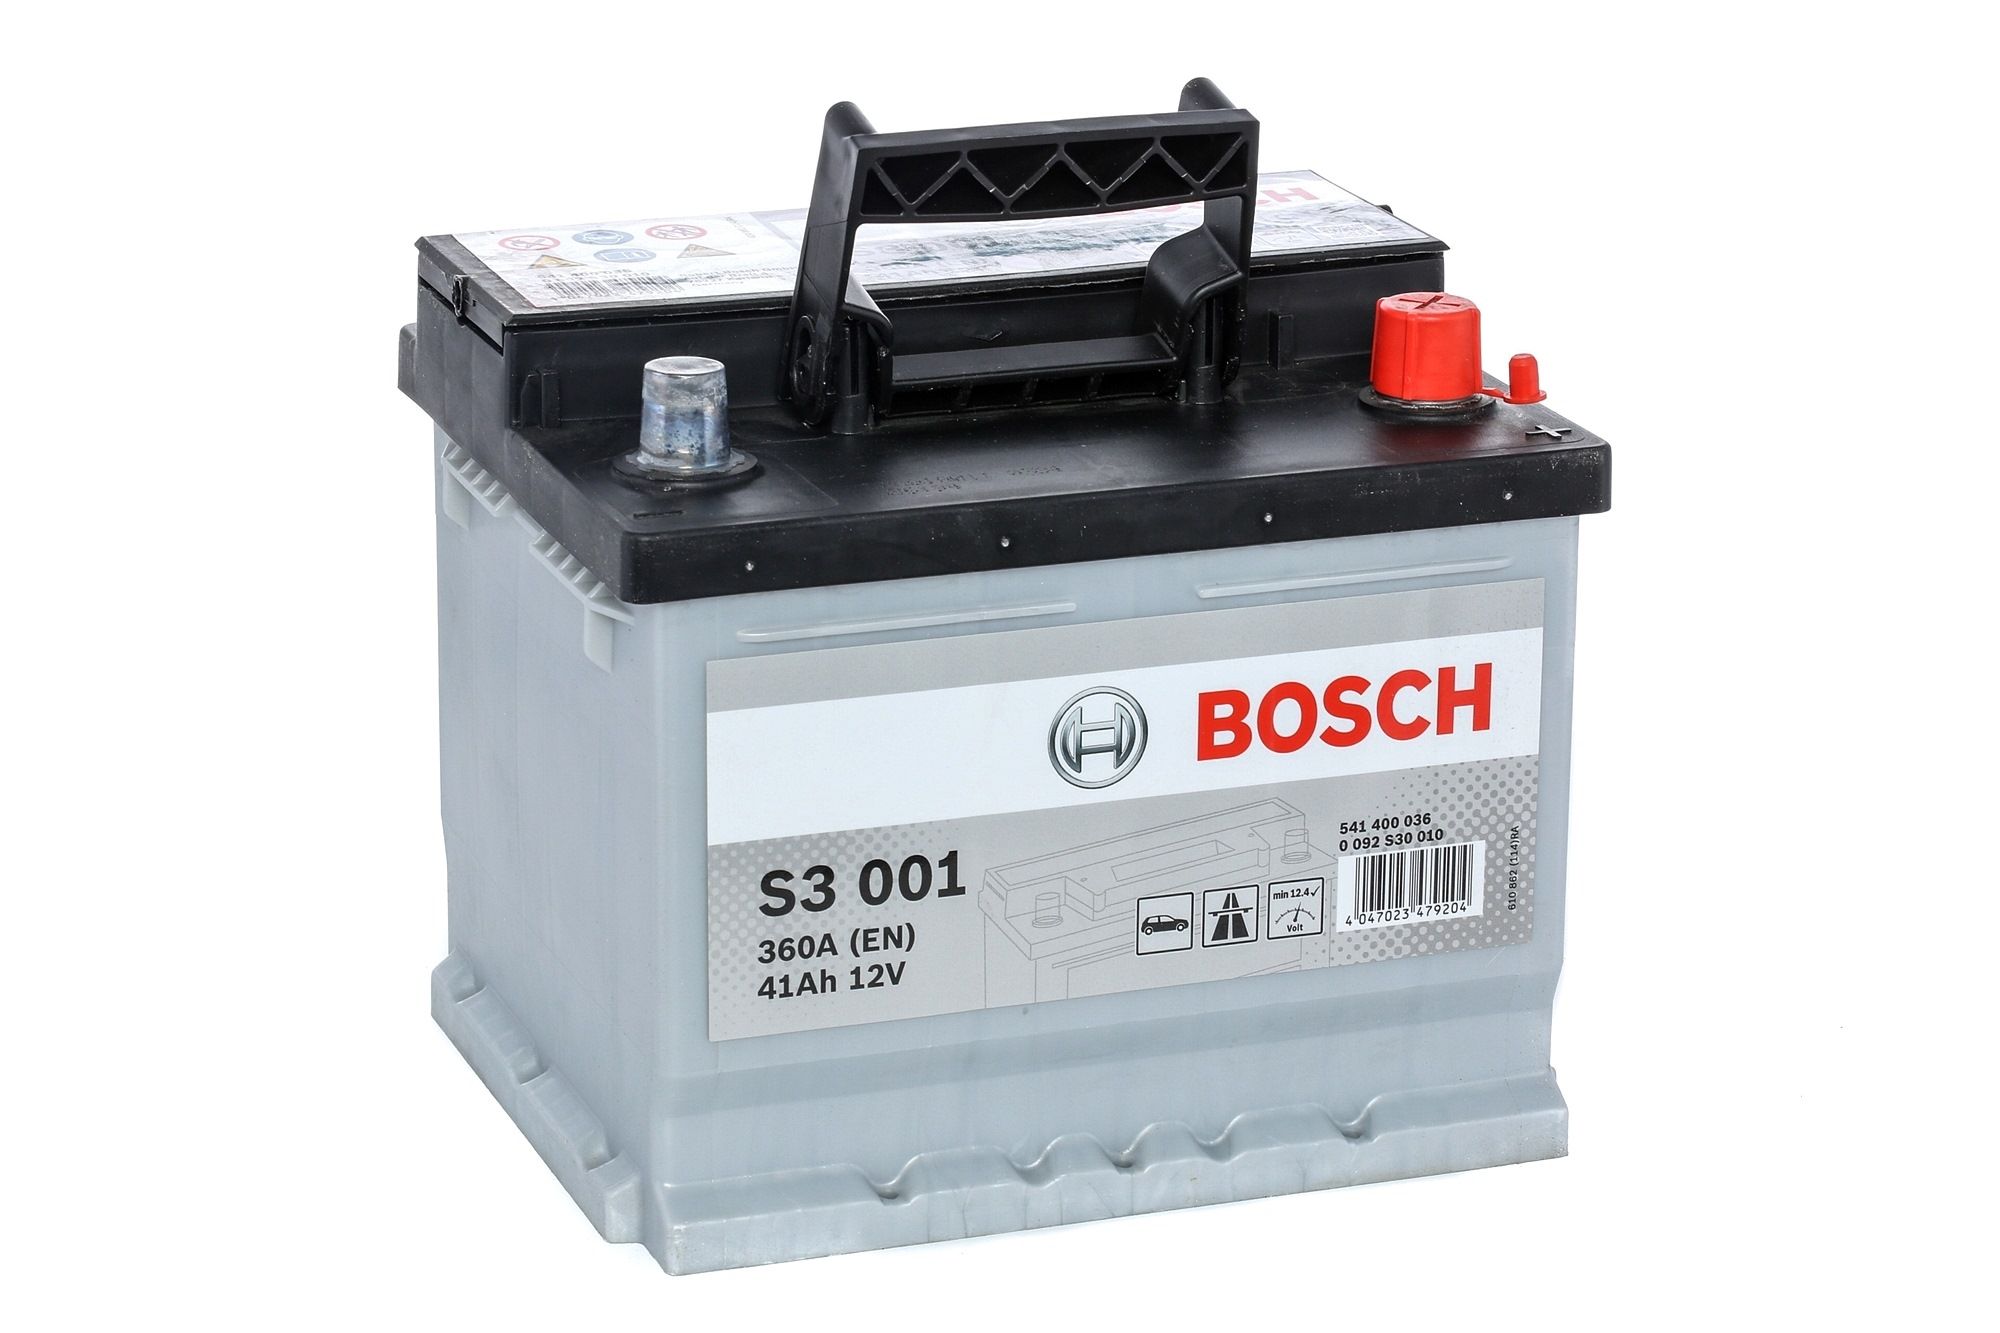 S3001 BOSCH S3 12V 41Ah 360A B13 Bleiakkumulator Kälteprüfstrom EN: 360A, Spannung: 12V Batterie 0 092 S30 010 günstig kaufen